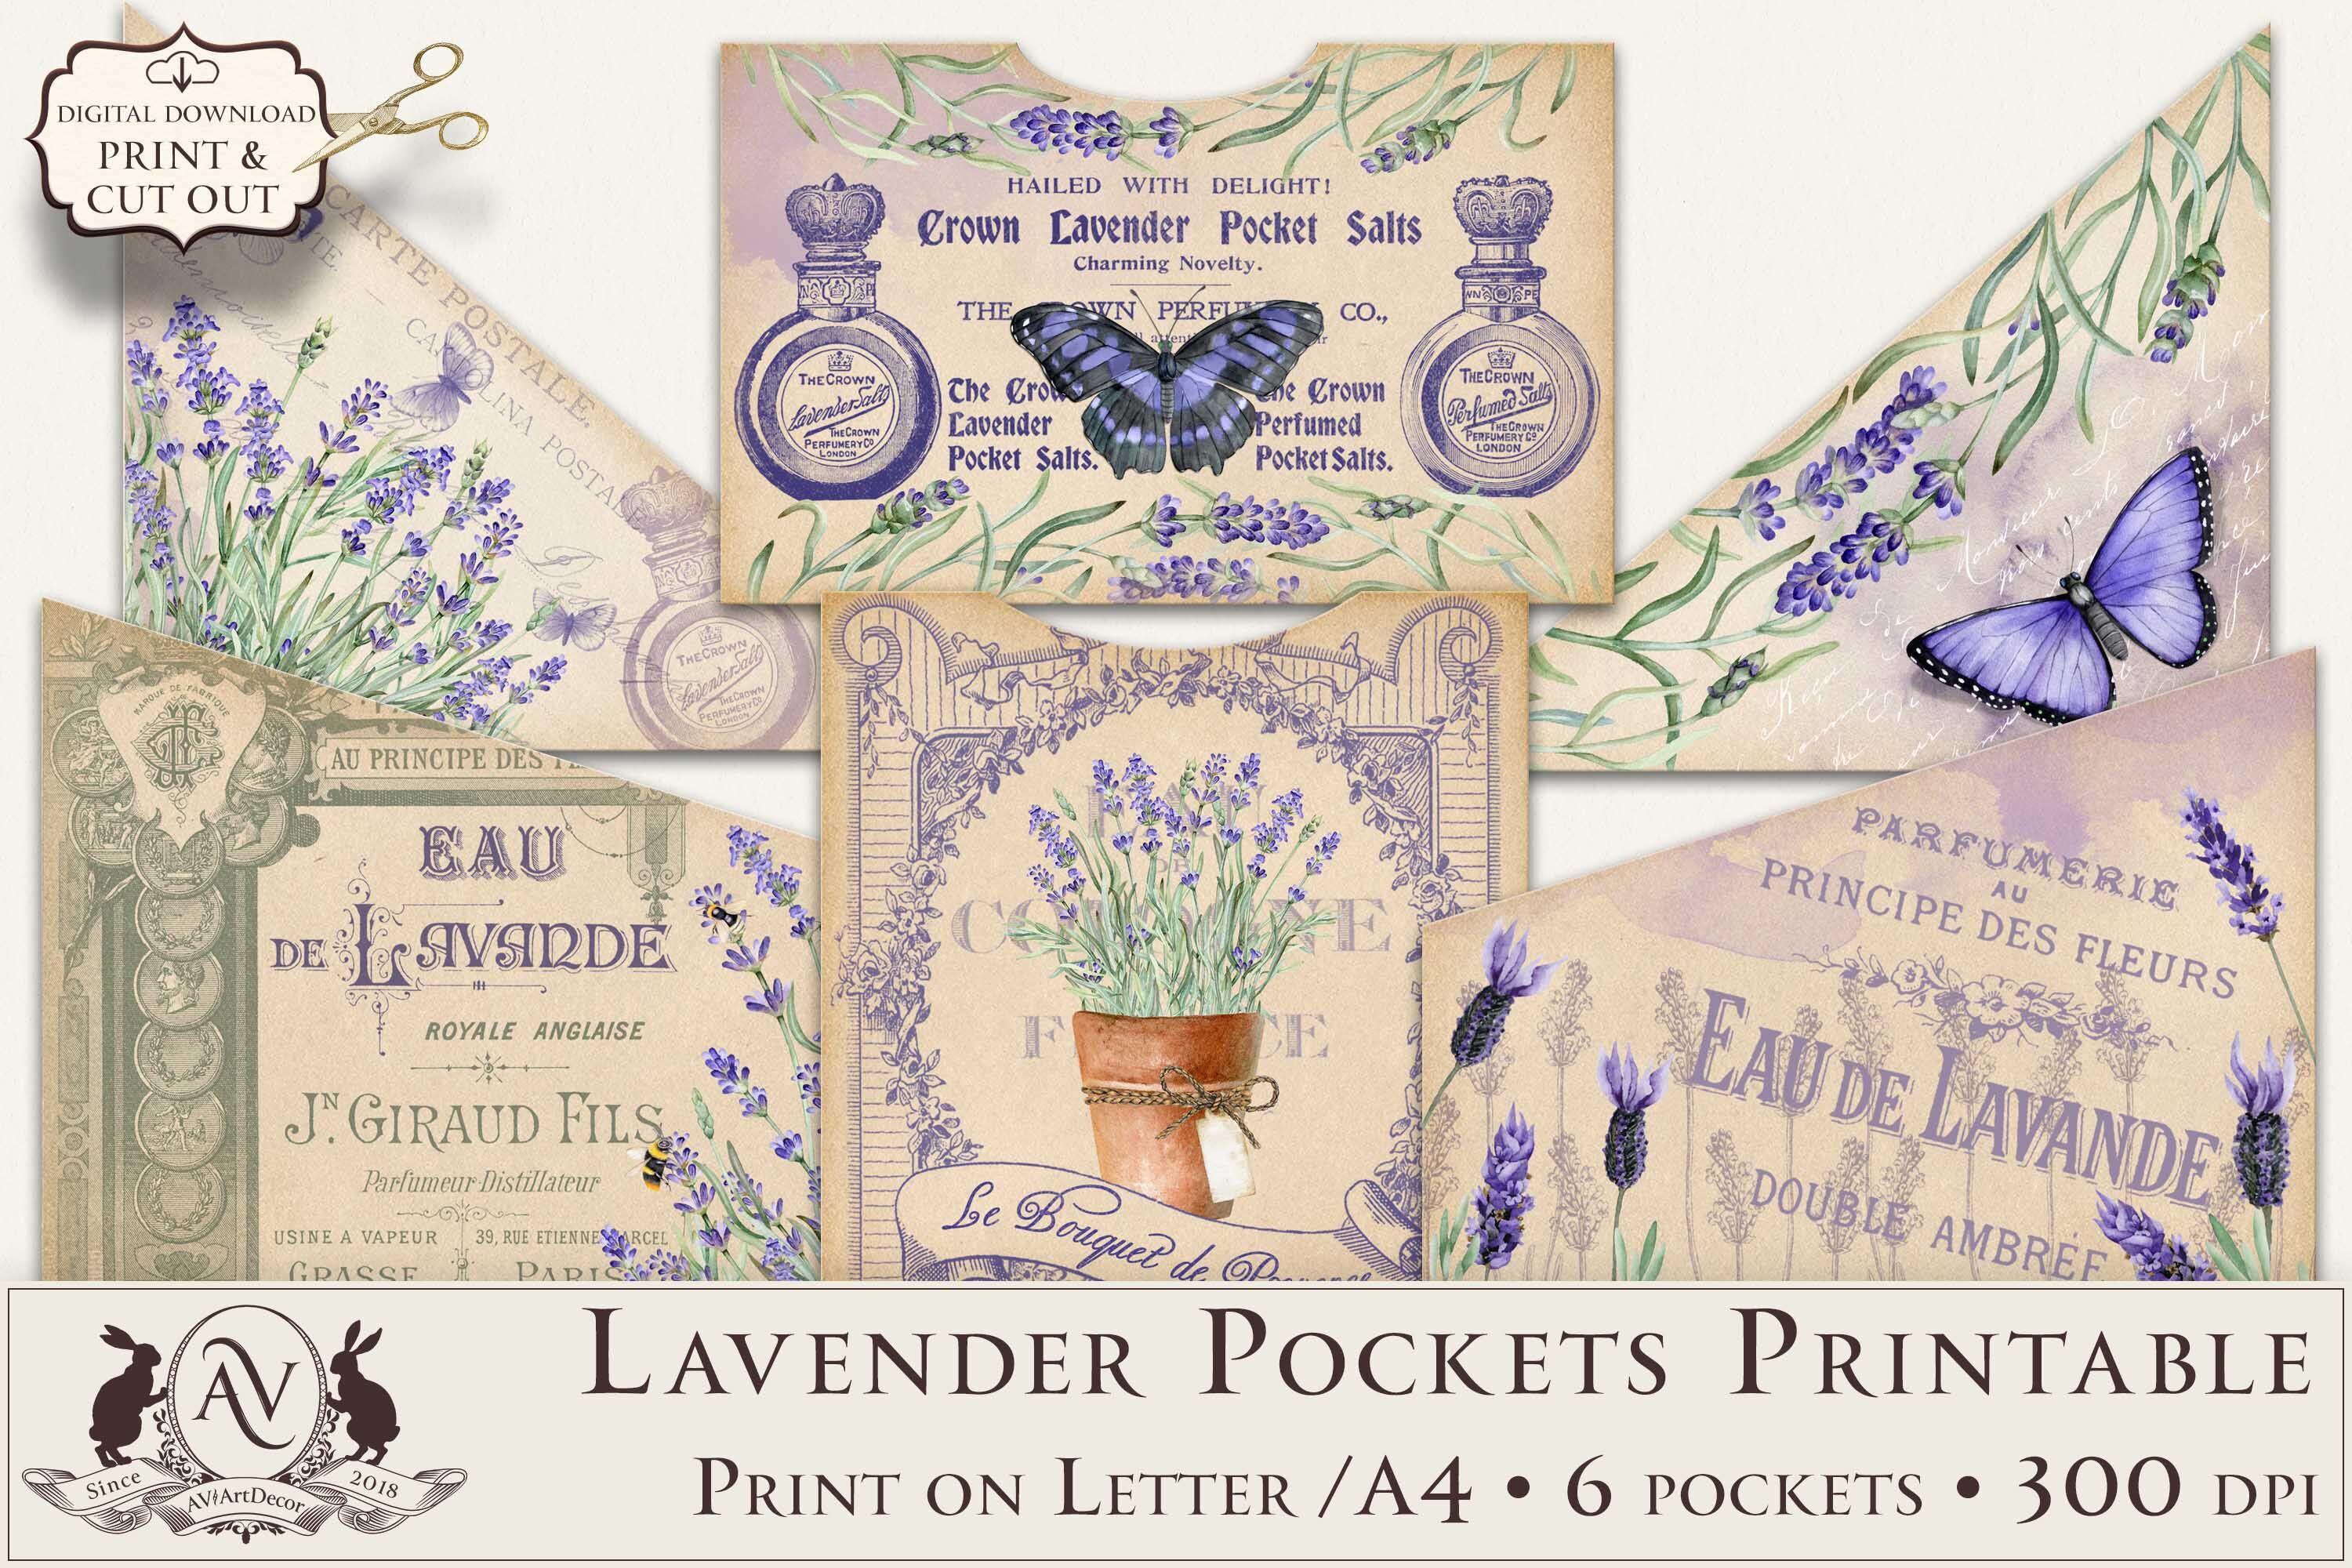 junk-journal-pockets-printable-lavender-junk-journal-tucks-by